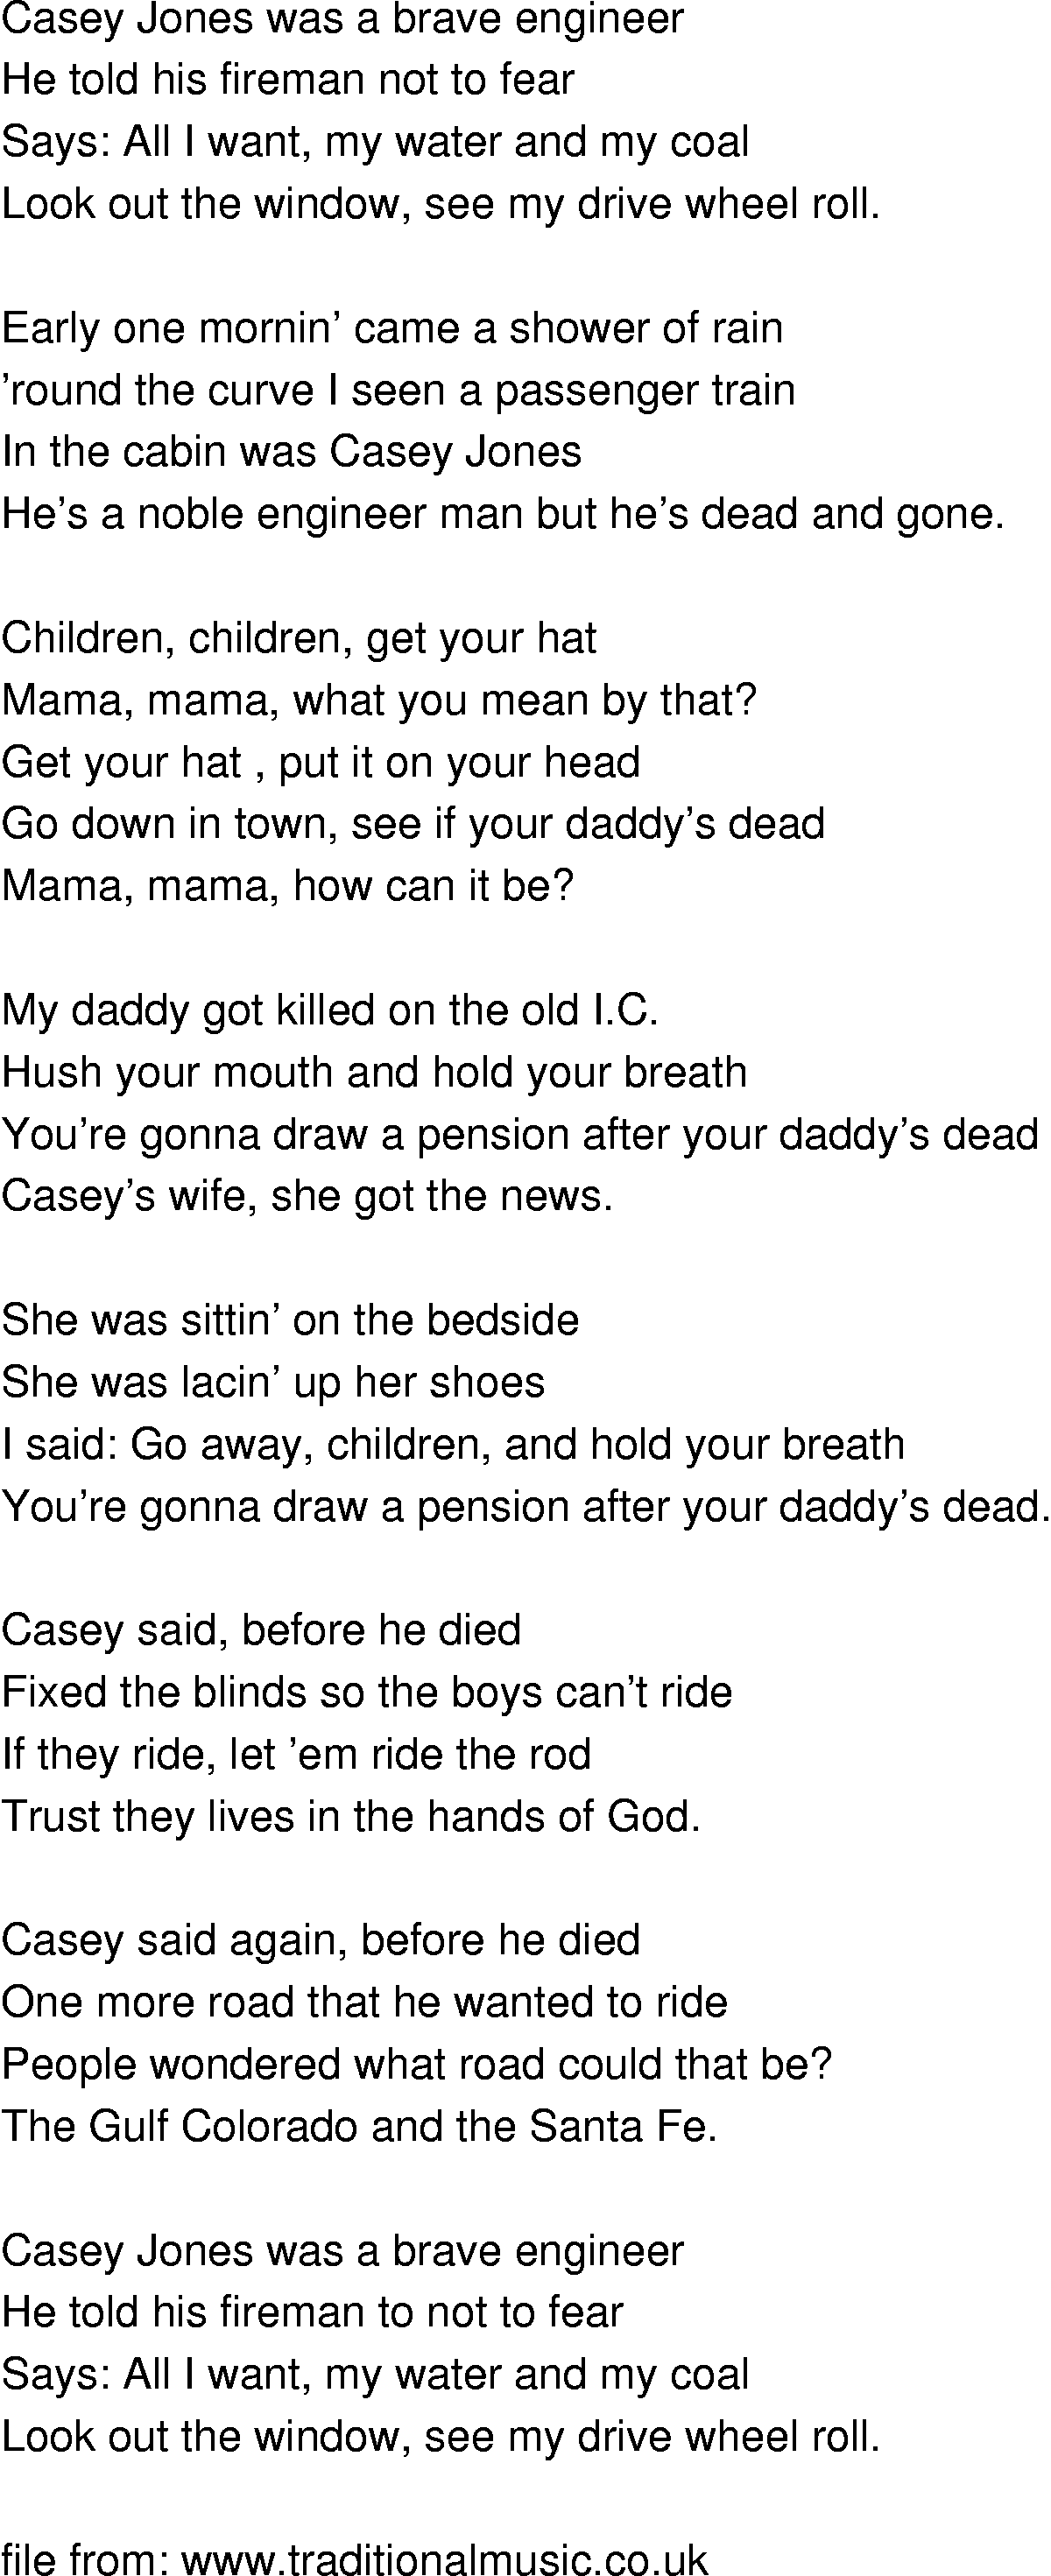 Old-Time (oldtimey) Song Lyrics - casey jones